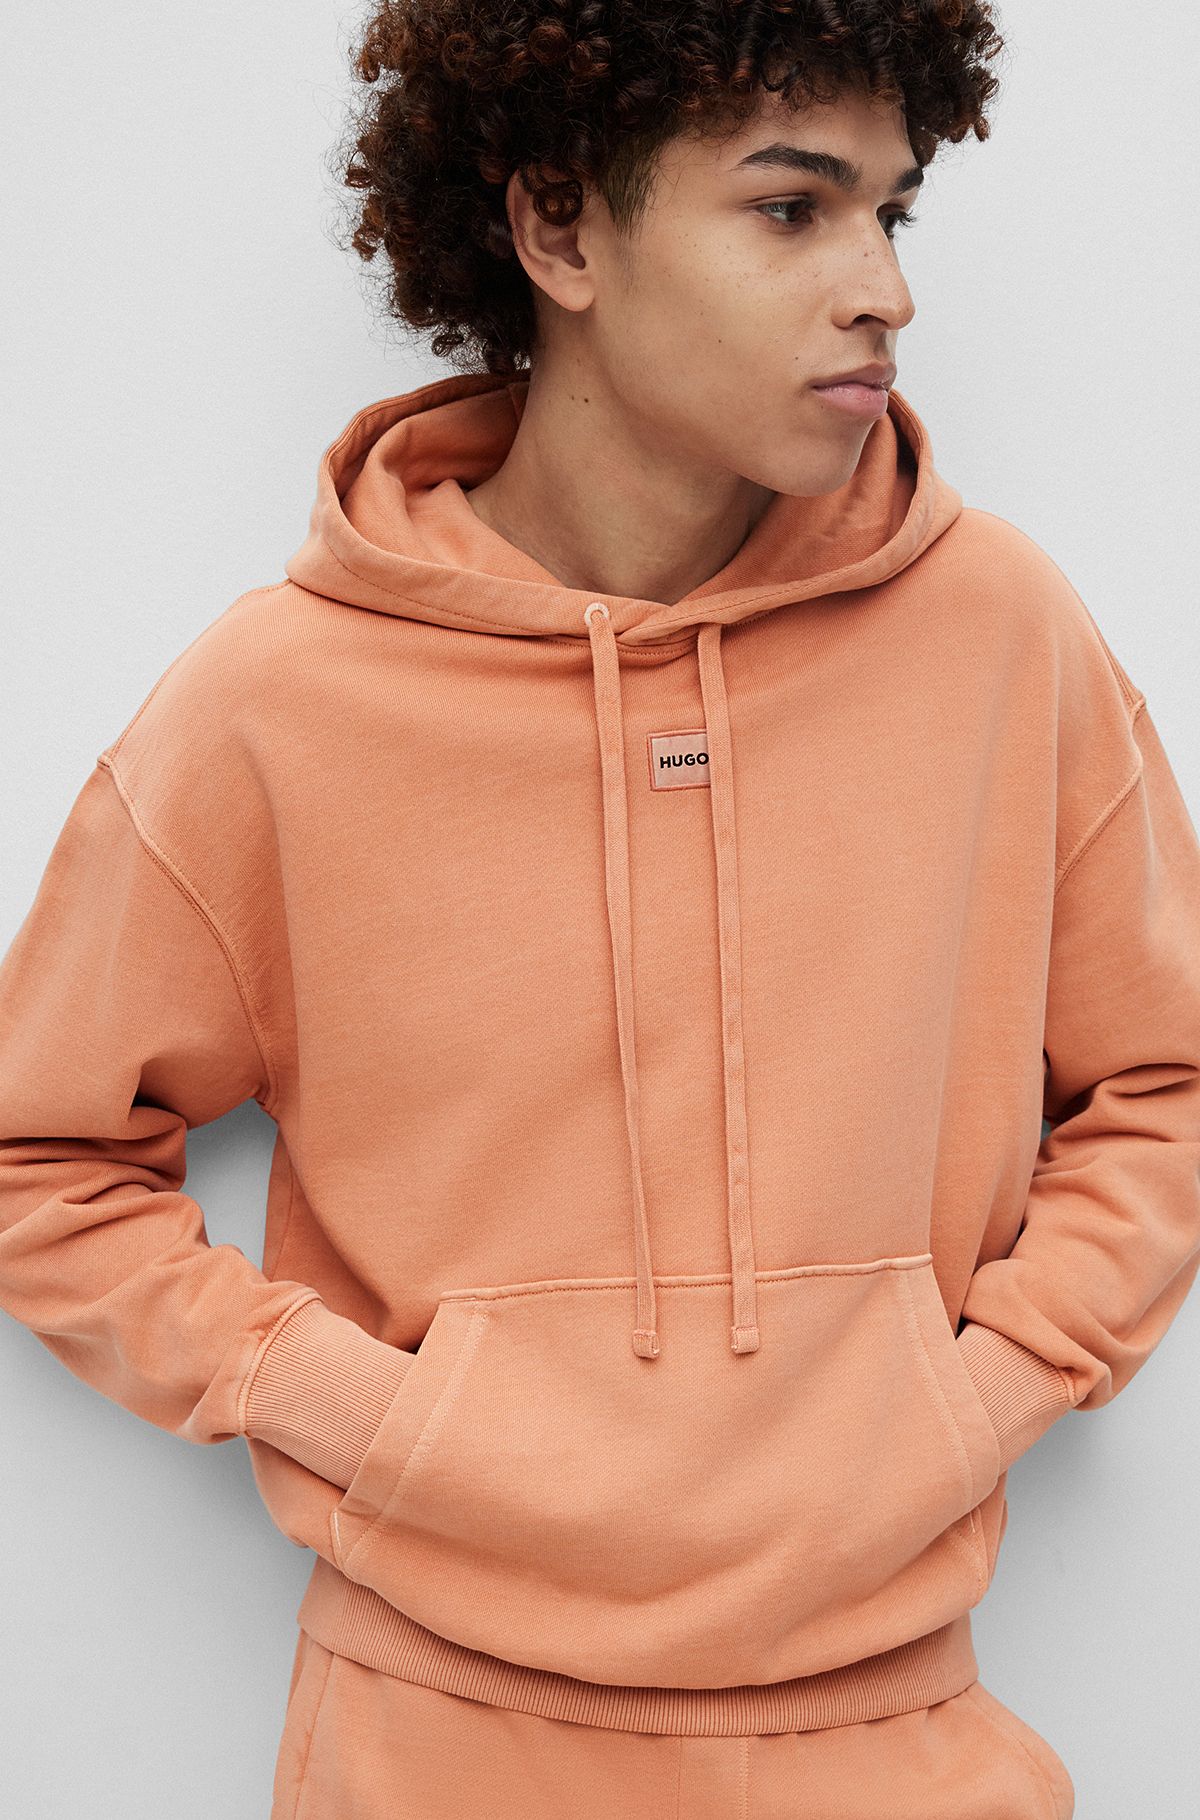 Stylish Orange Hoodies for Men by HUGO BOSS | Designer Menswear | Lange Ketten